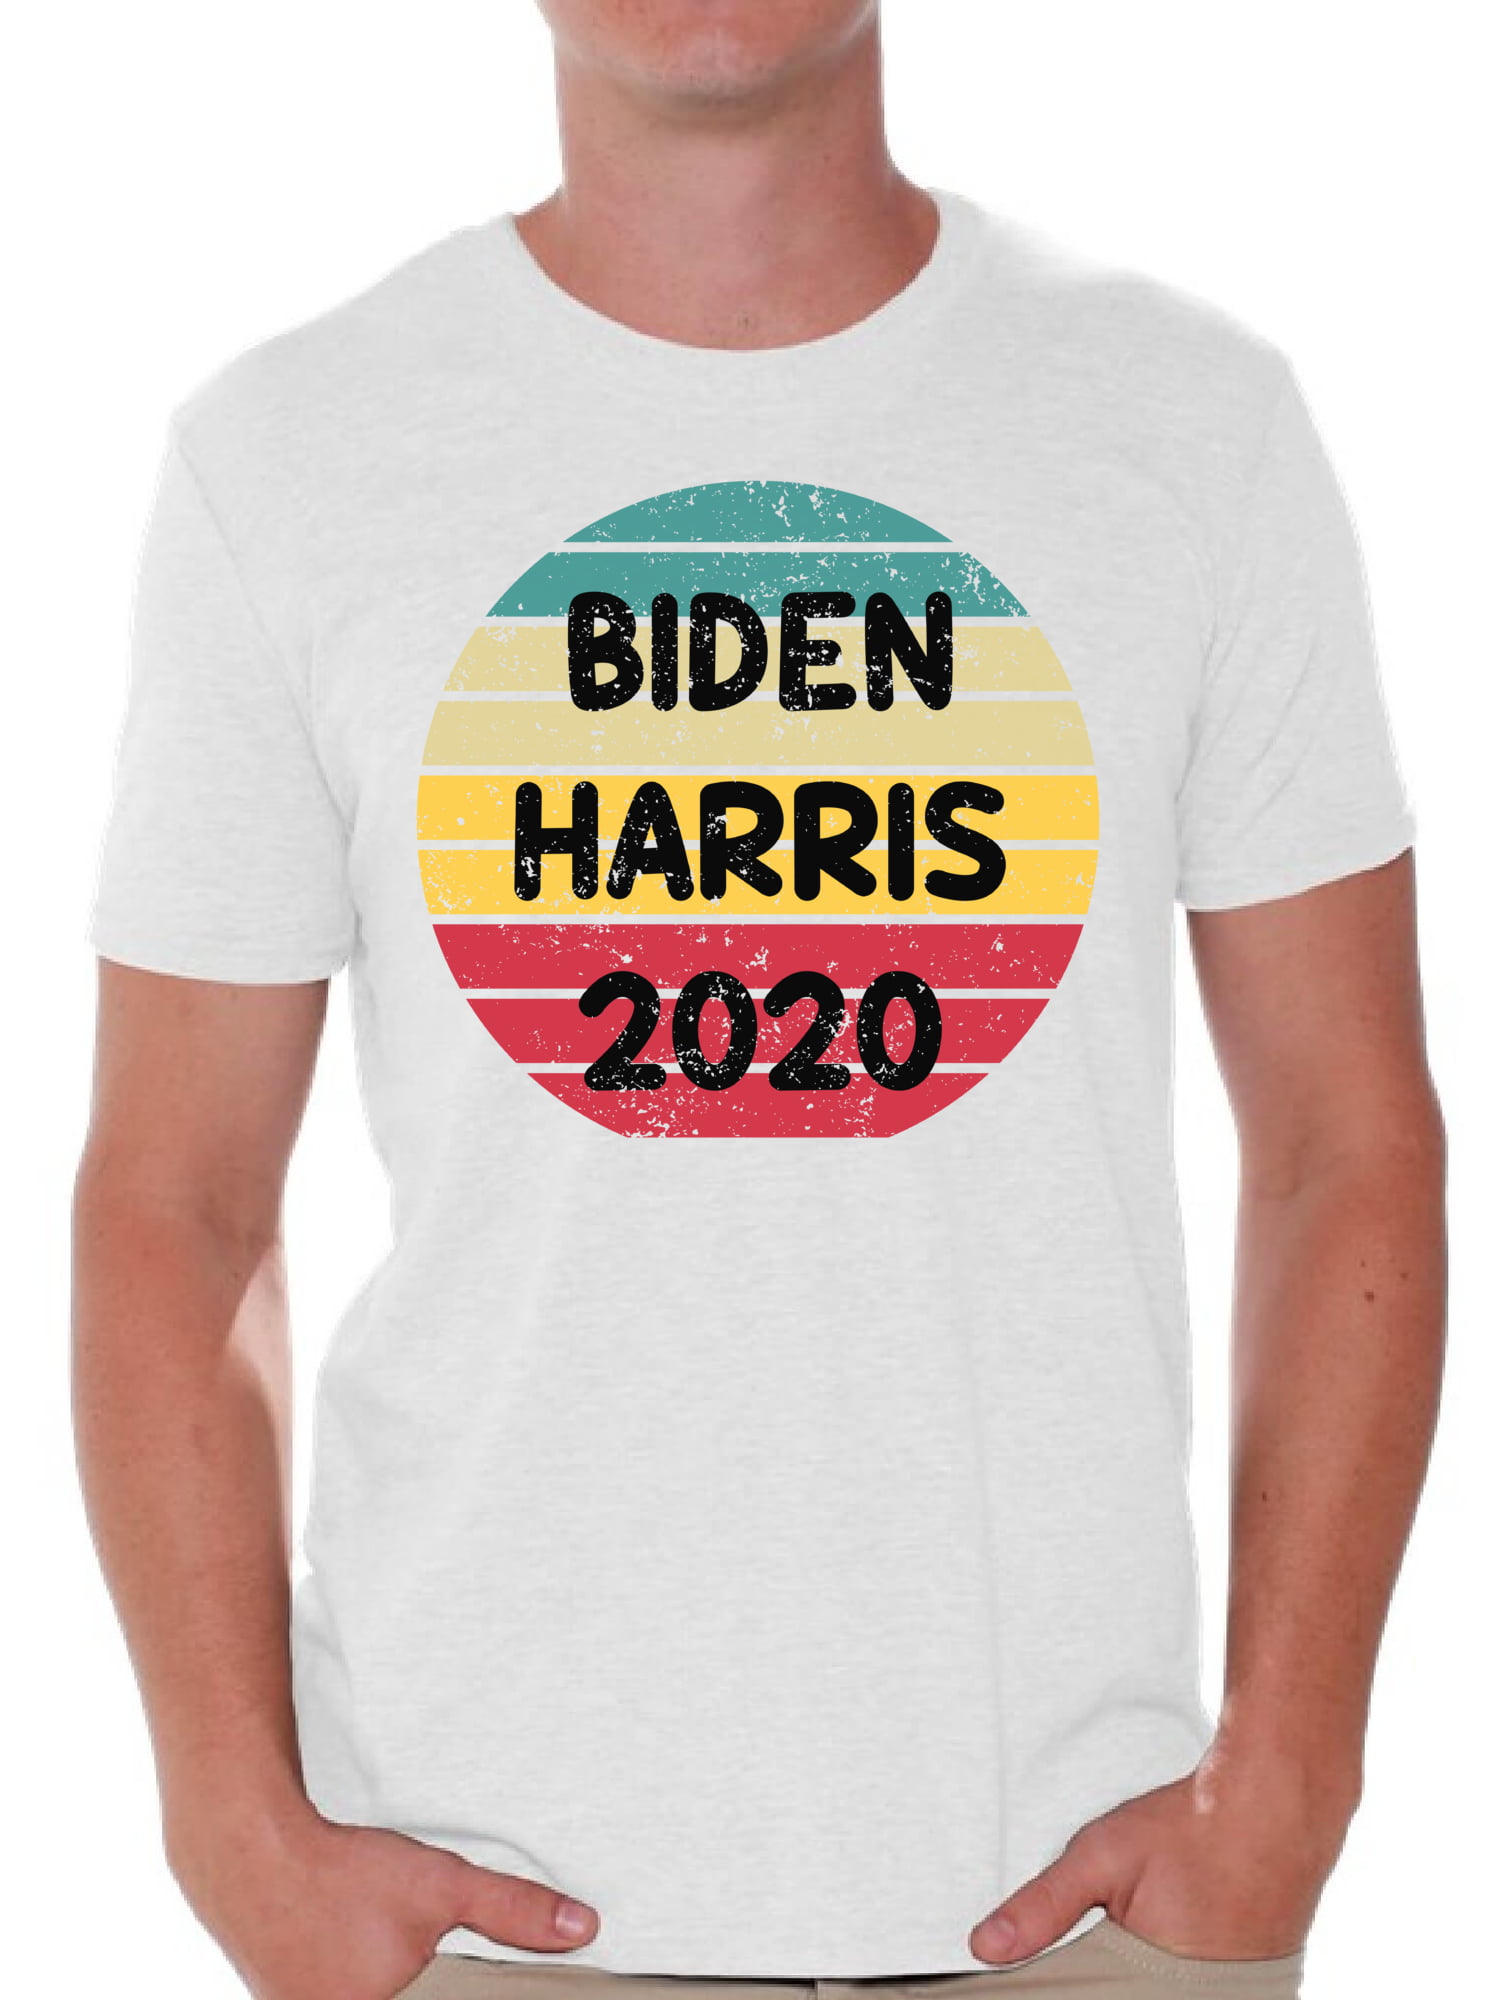 Biden and Harris 2020 election shirt Unisex  t-shirt-JOE 2020 shirts 